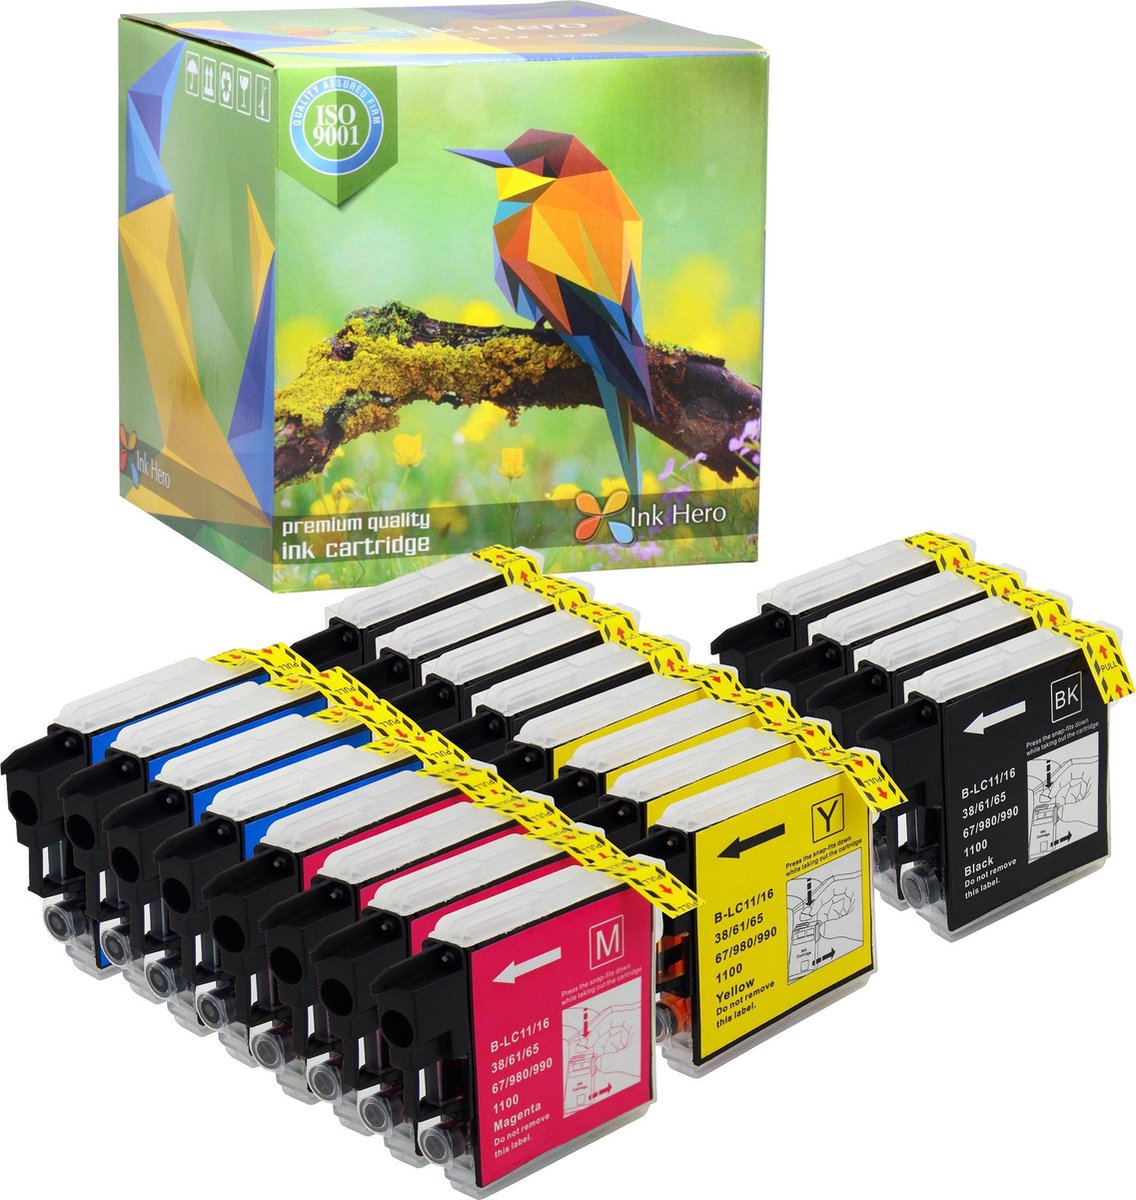 Ink Hero - 20 Pack - Inktcartridge / Alternatief voor de Brother LC985 DCP-J125 DCP-J140W DCP-J315W DCP-J515W MFC-J220 MFC-J265W MFC-J410 MFC-J415W